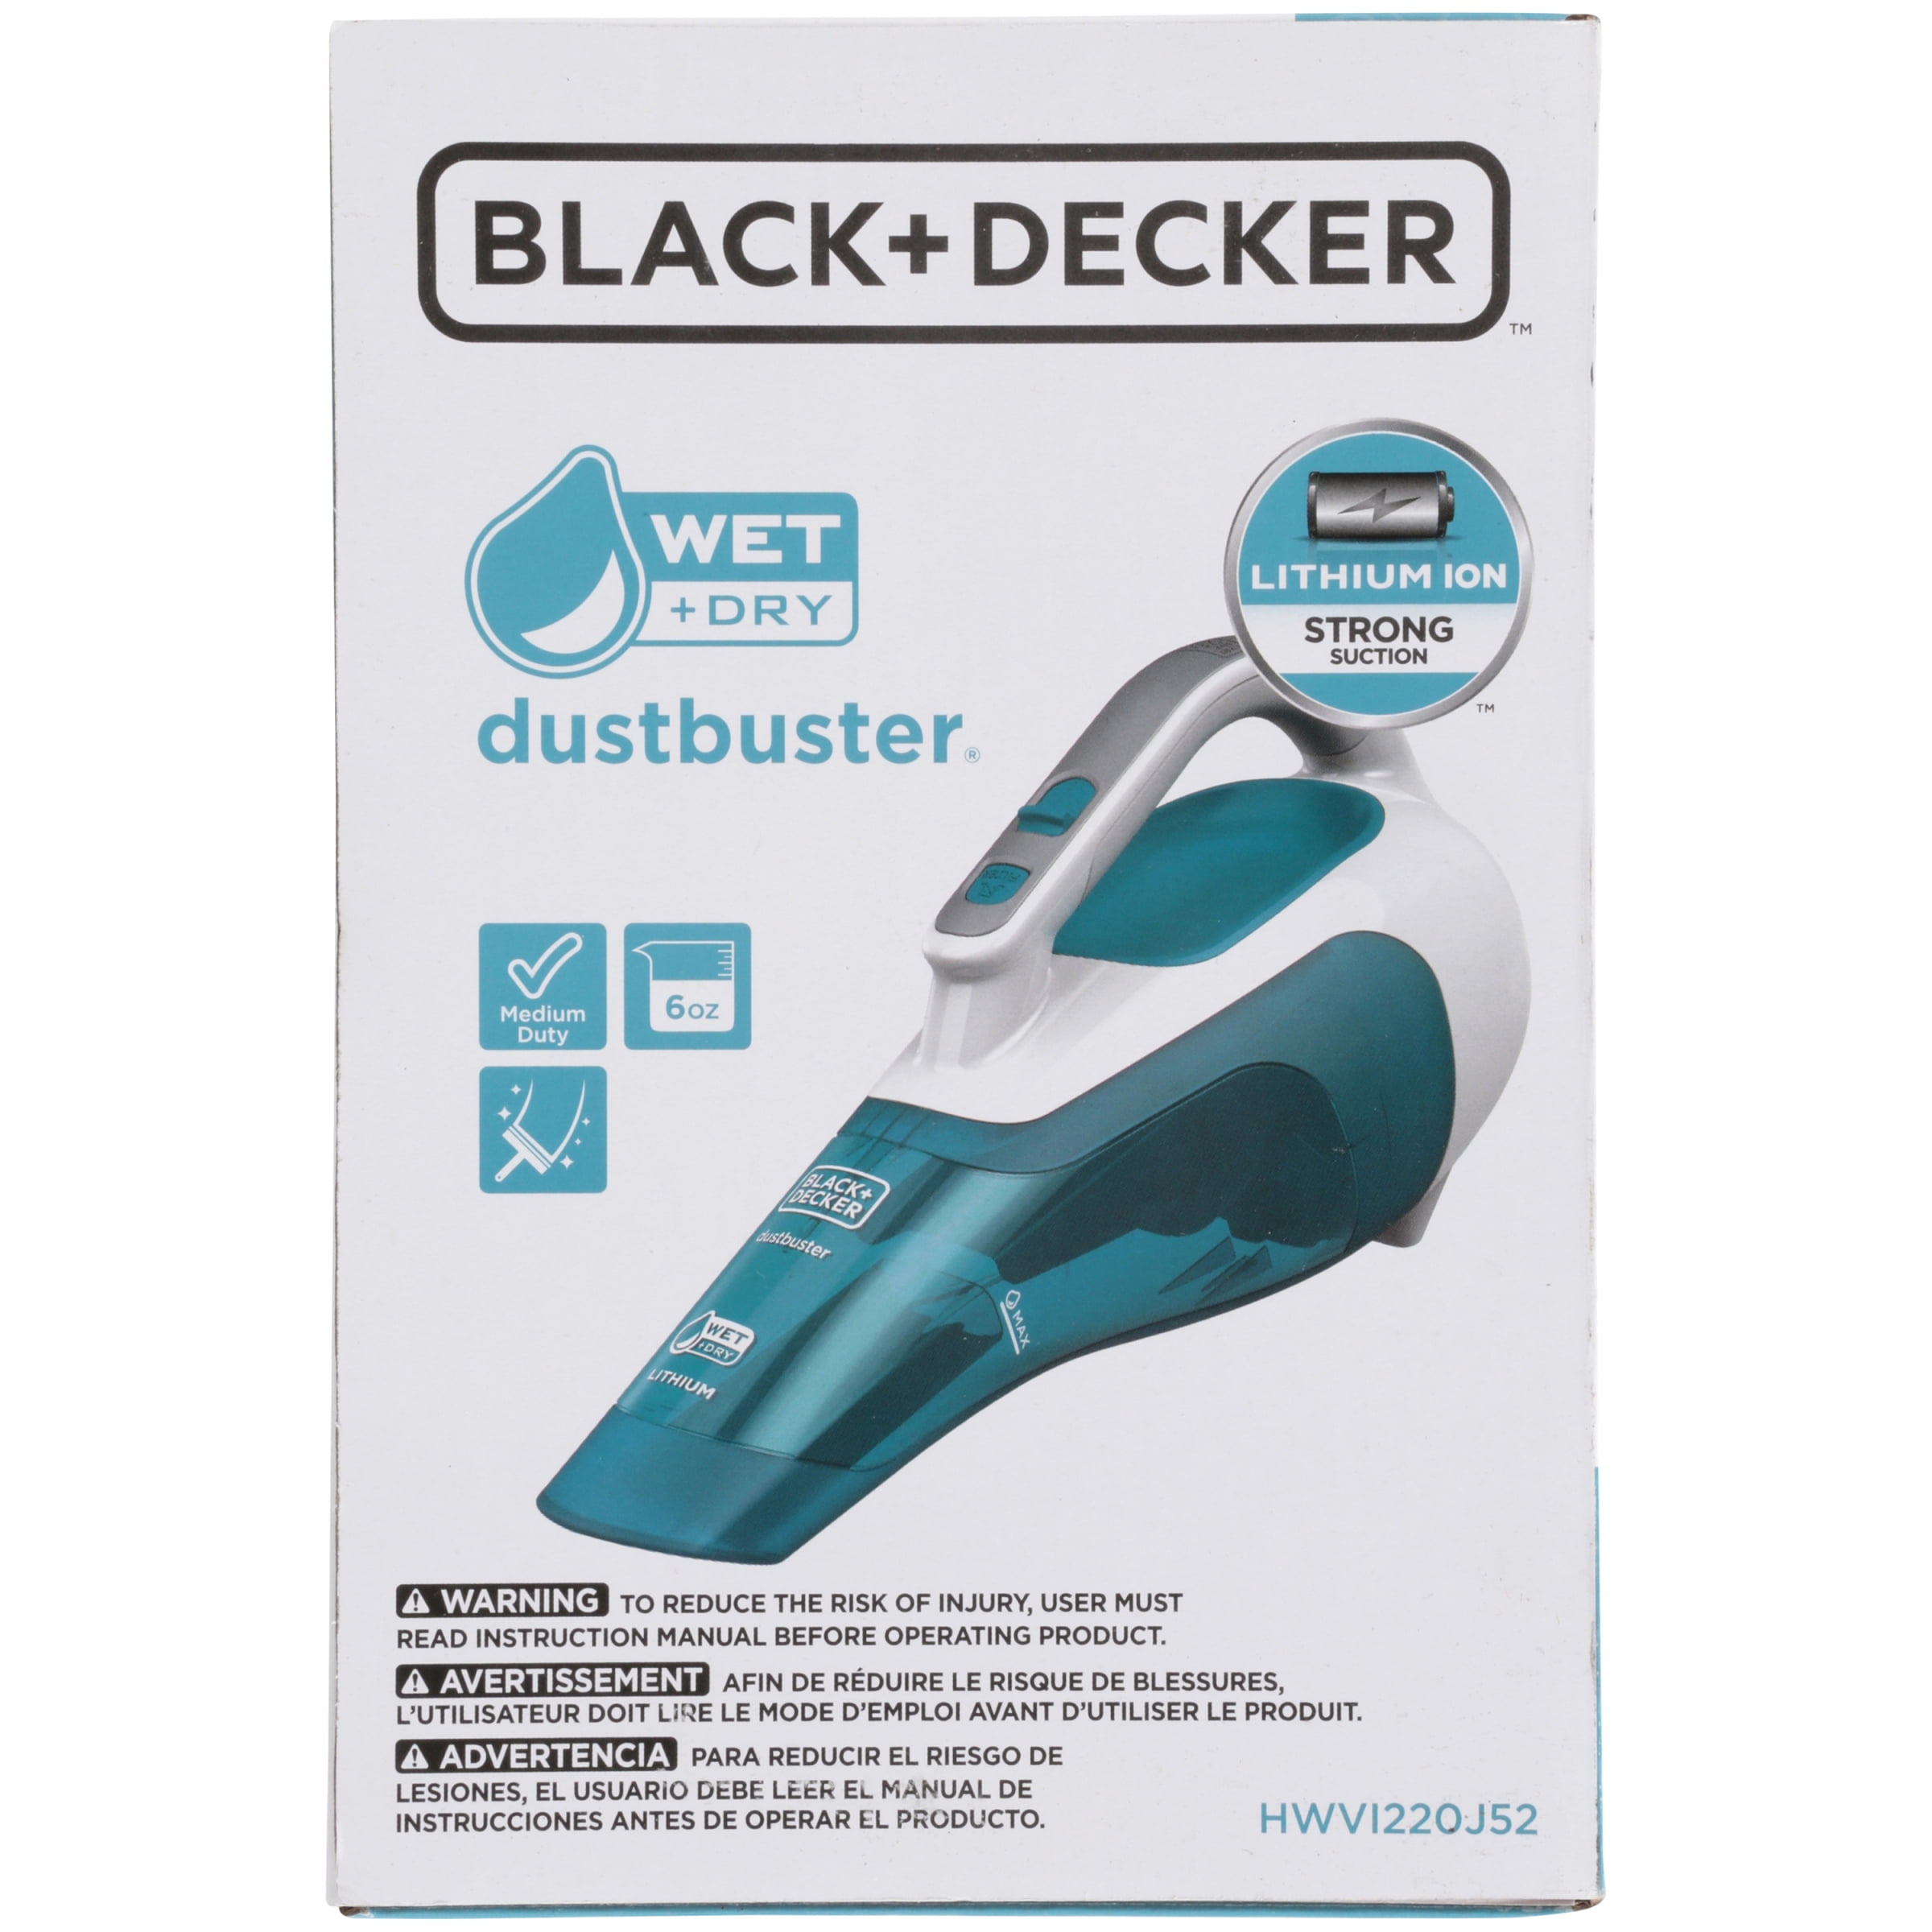 Black & Decker Cordless Wet/Dry Hand Vacuum, Lithium-Ion Battery